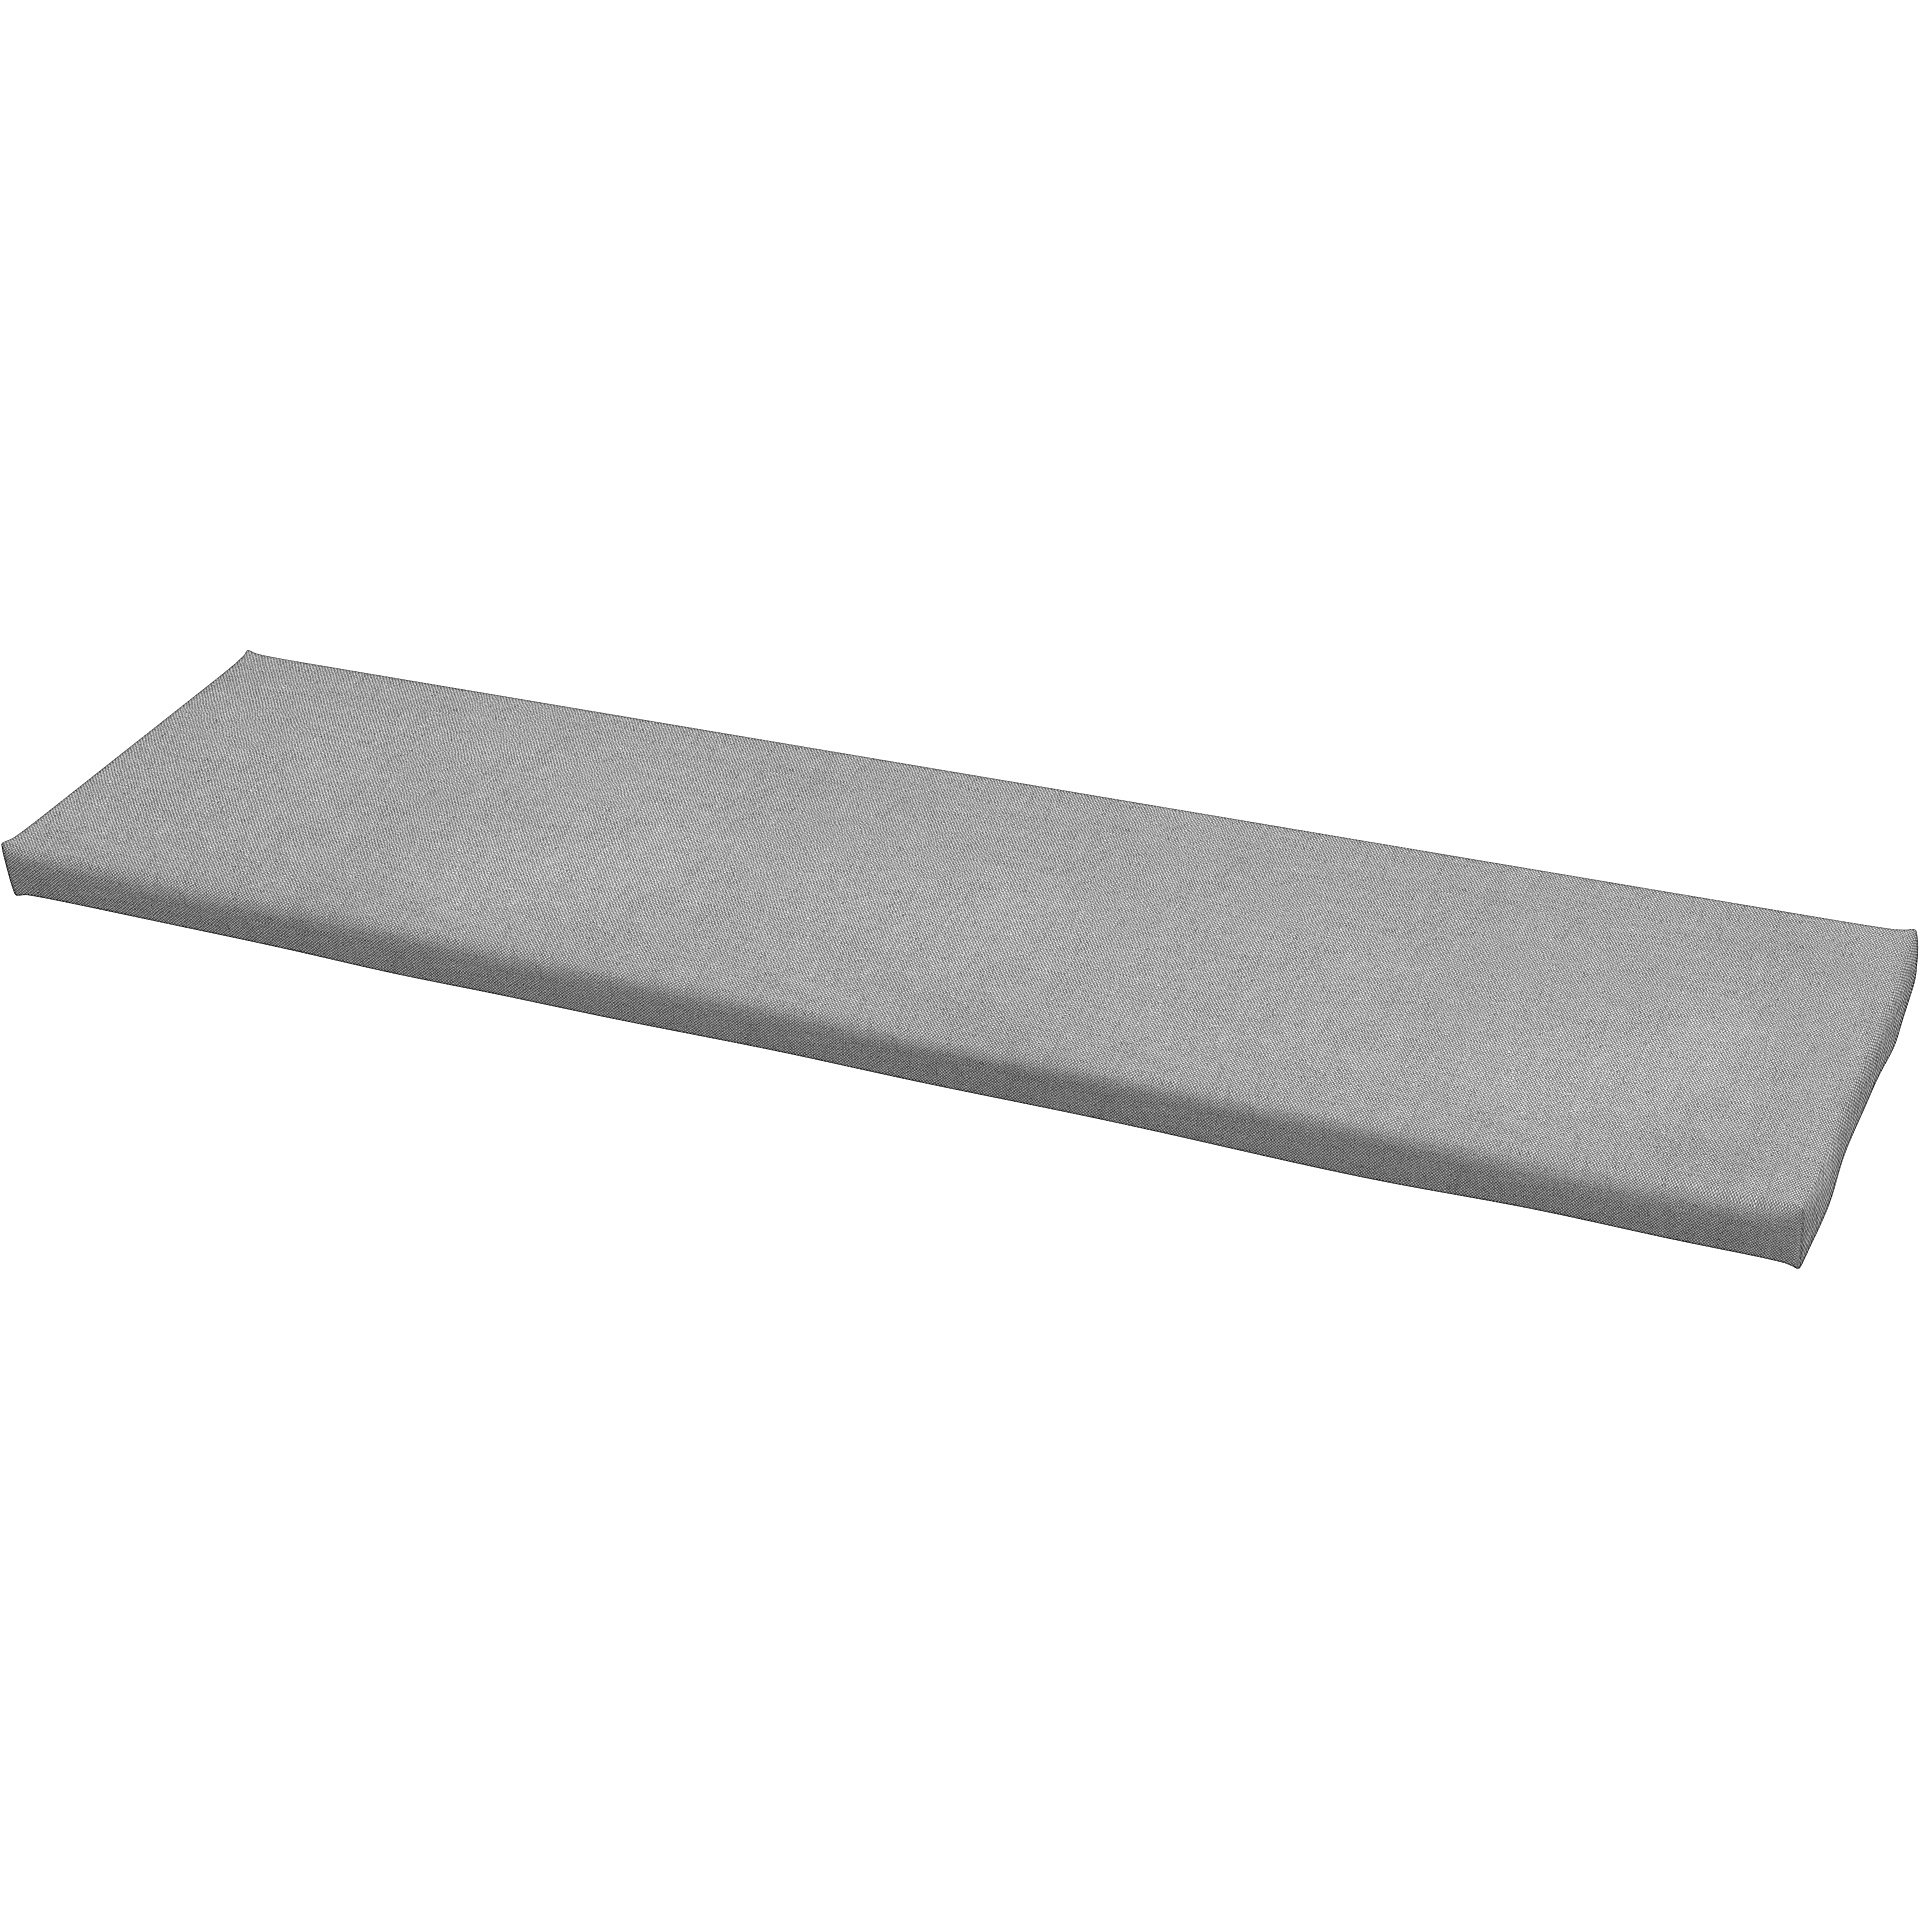 IKEA - Universal bench cushion cover 140x35x3,5 cm, Graphite, Linen - Bemz